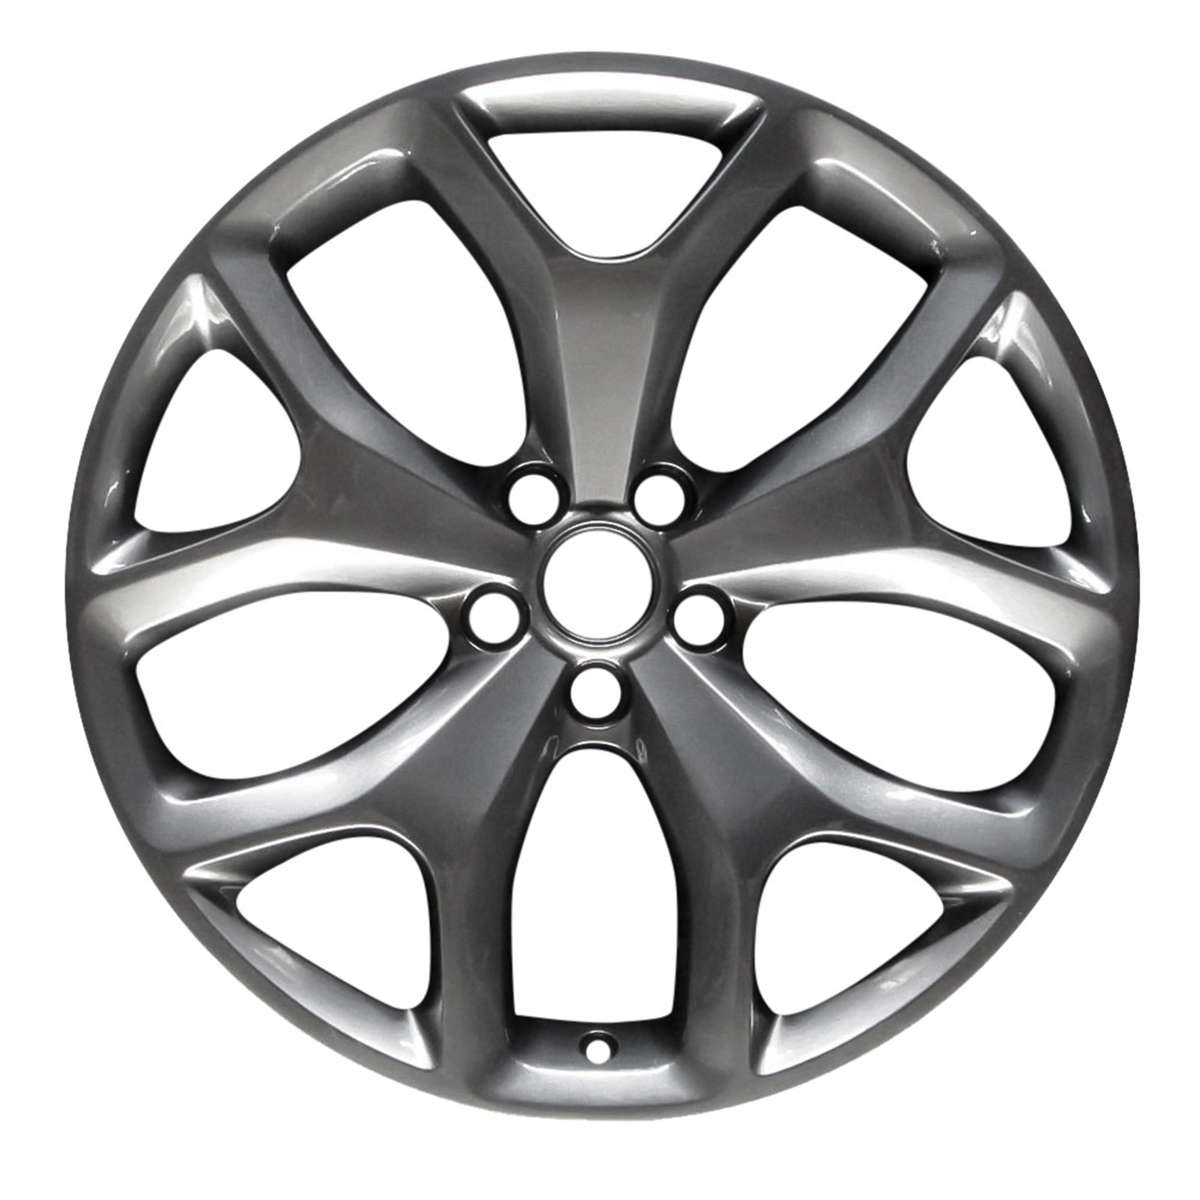 2014 Dodge Charger 20" OEM Wheel Rim W2523C